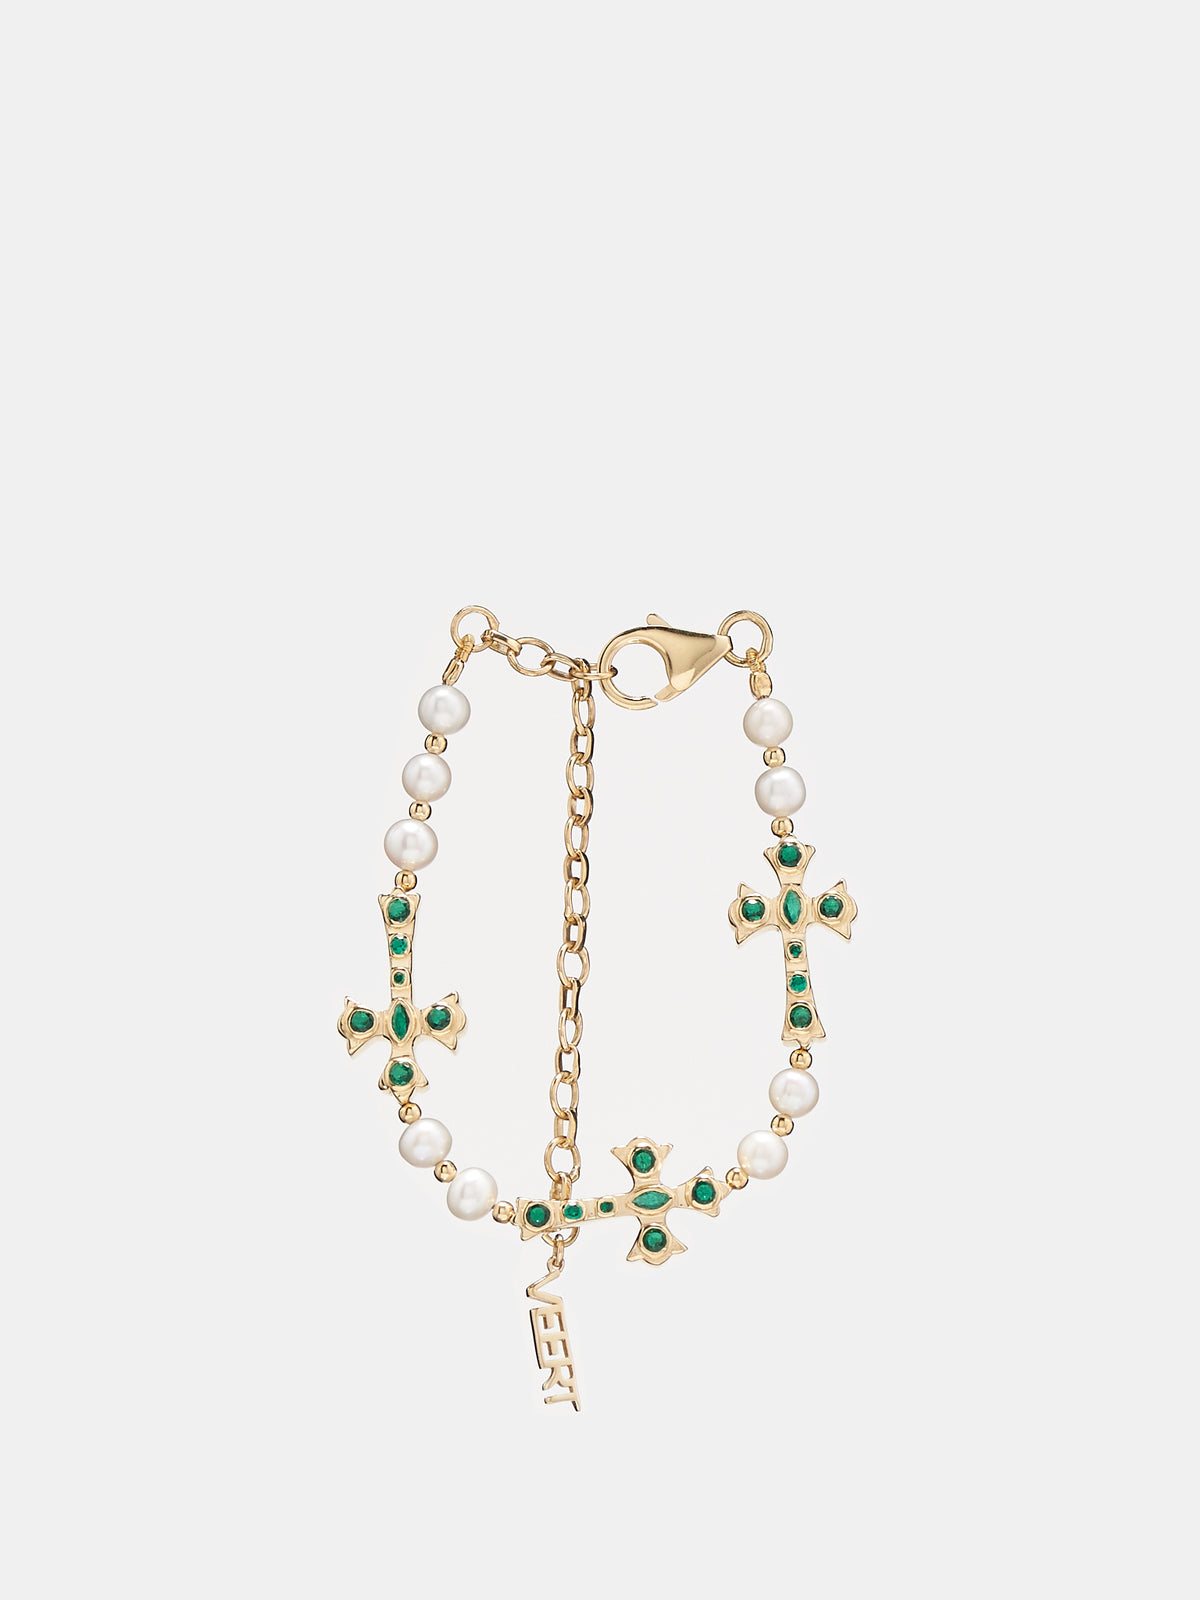 The Cross & Pearl Bracelet (SBR1347-YG-YELLOW-GOLD)